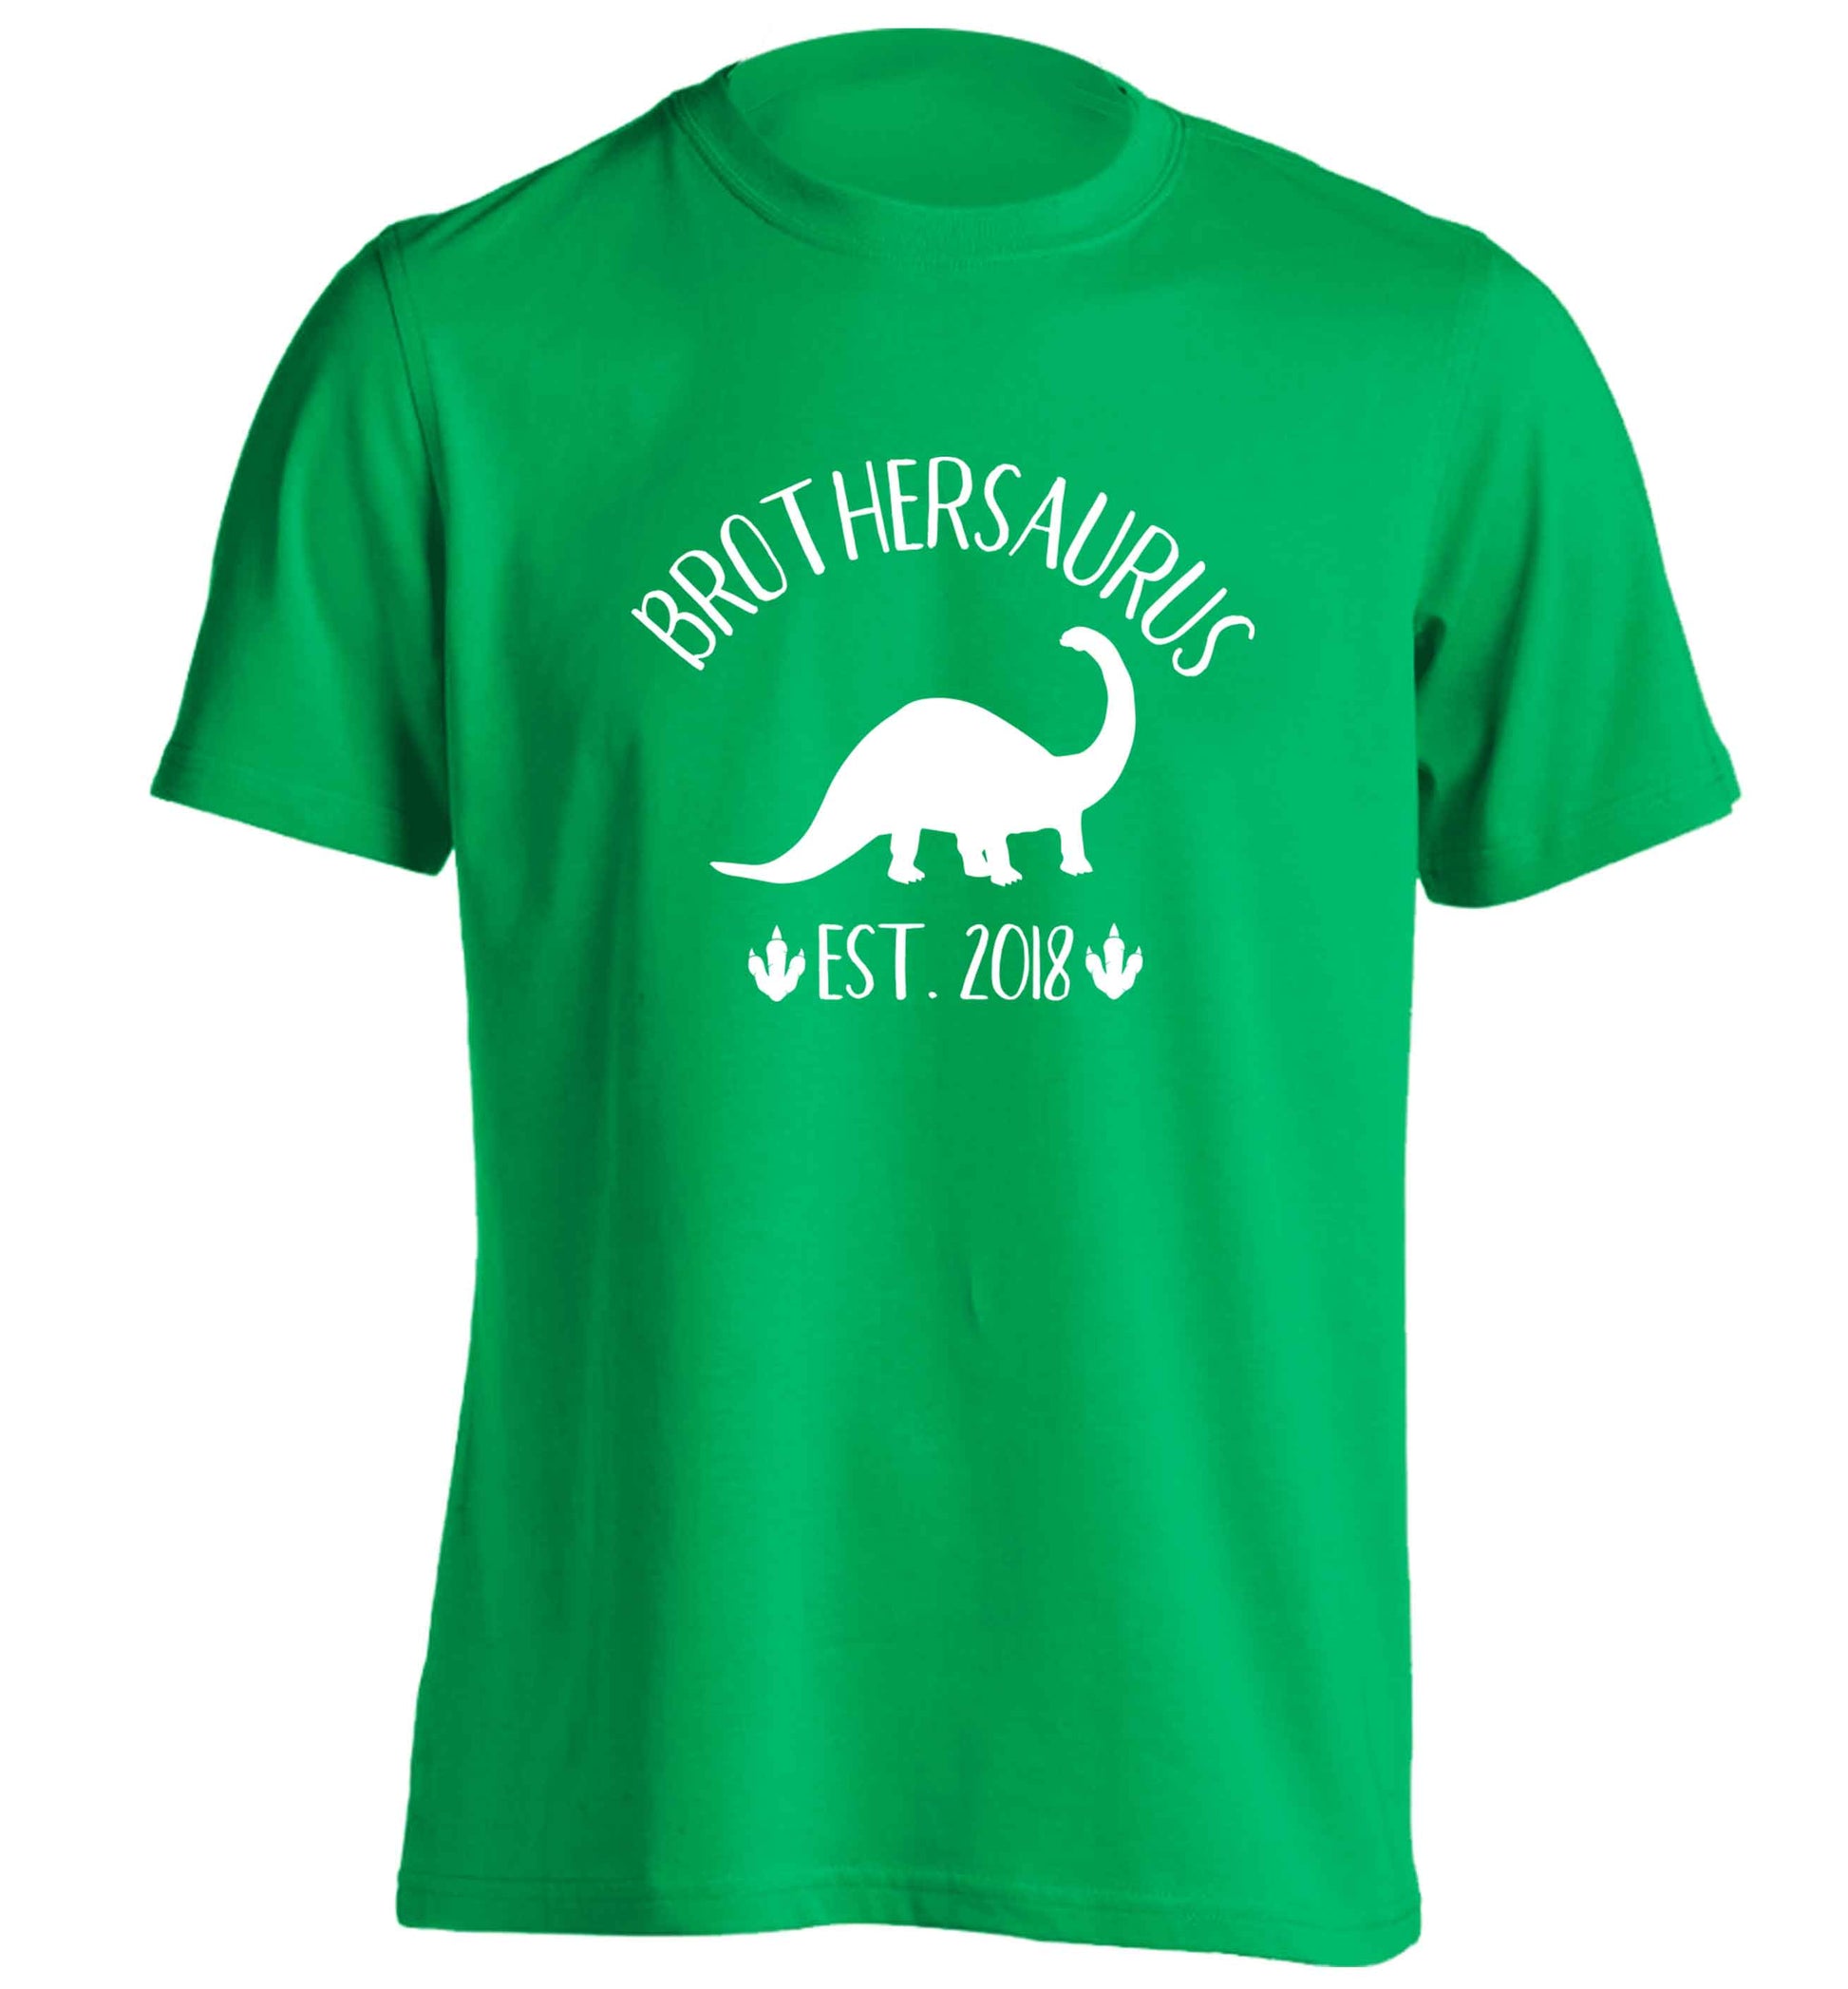 Personalised brothersaurus since (custom date) adults unisex green Tshirt 2XL